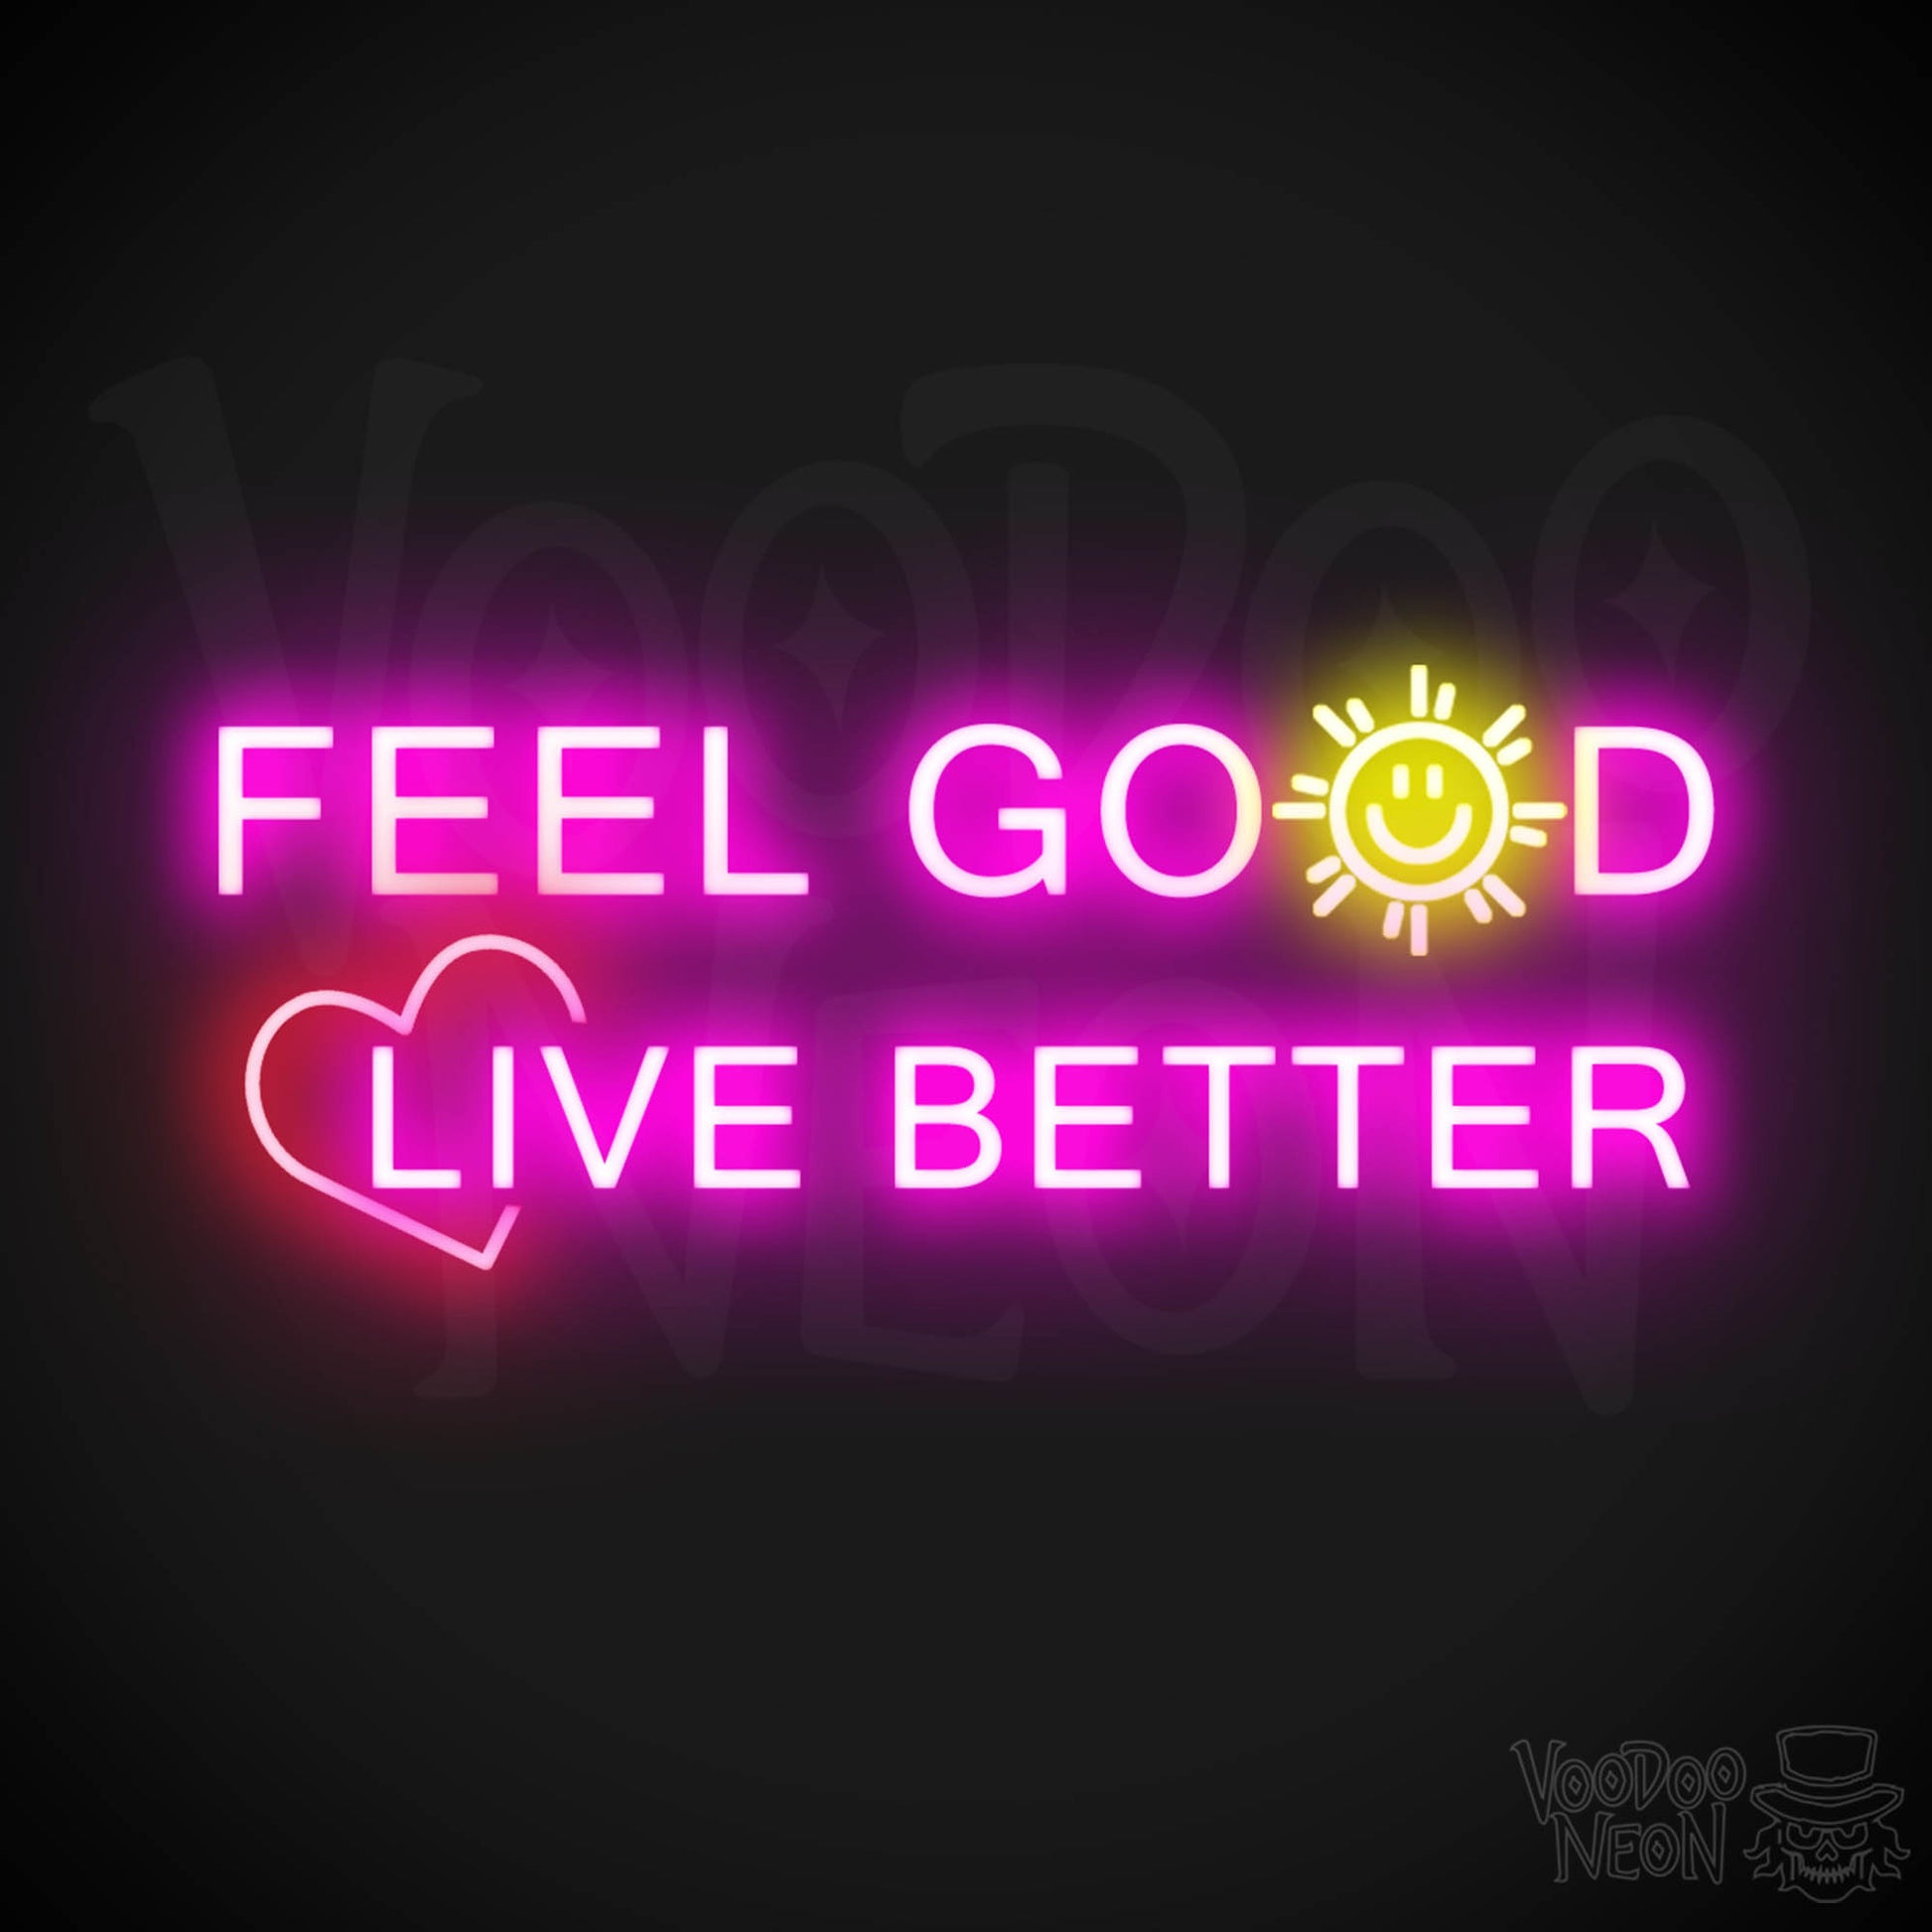 Feel Good Live Better Neon Sign - Feel Good Live Better Sign - Color Multi-Color